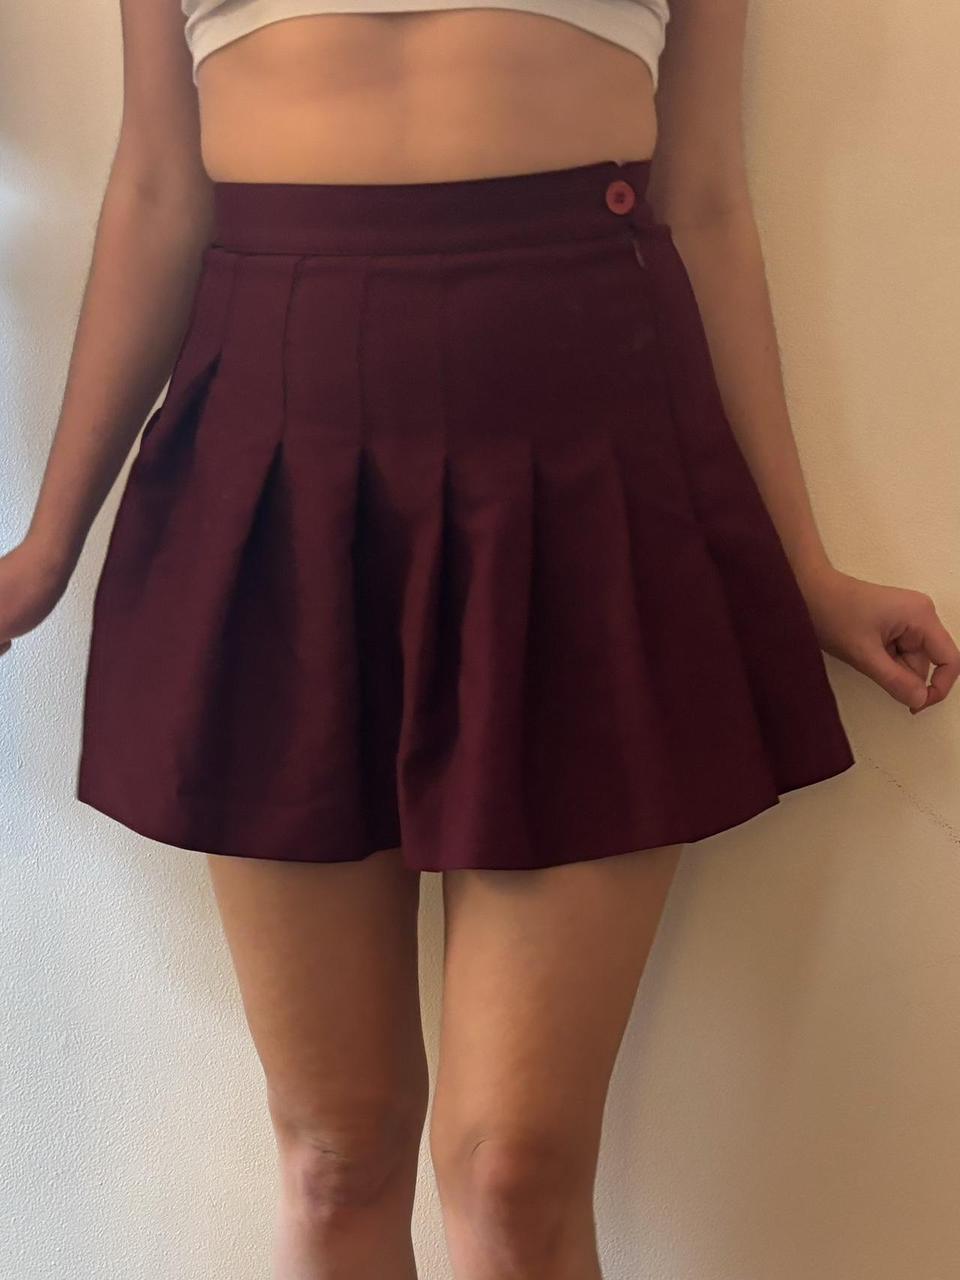 American Apparel Women's Burgundy Skirt (2)